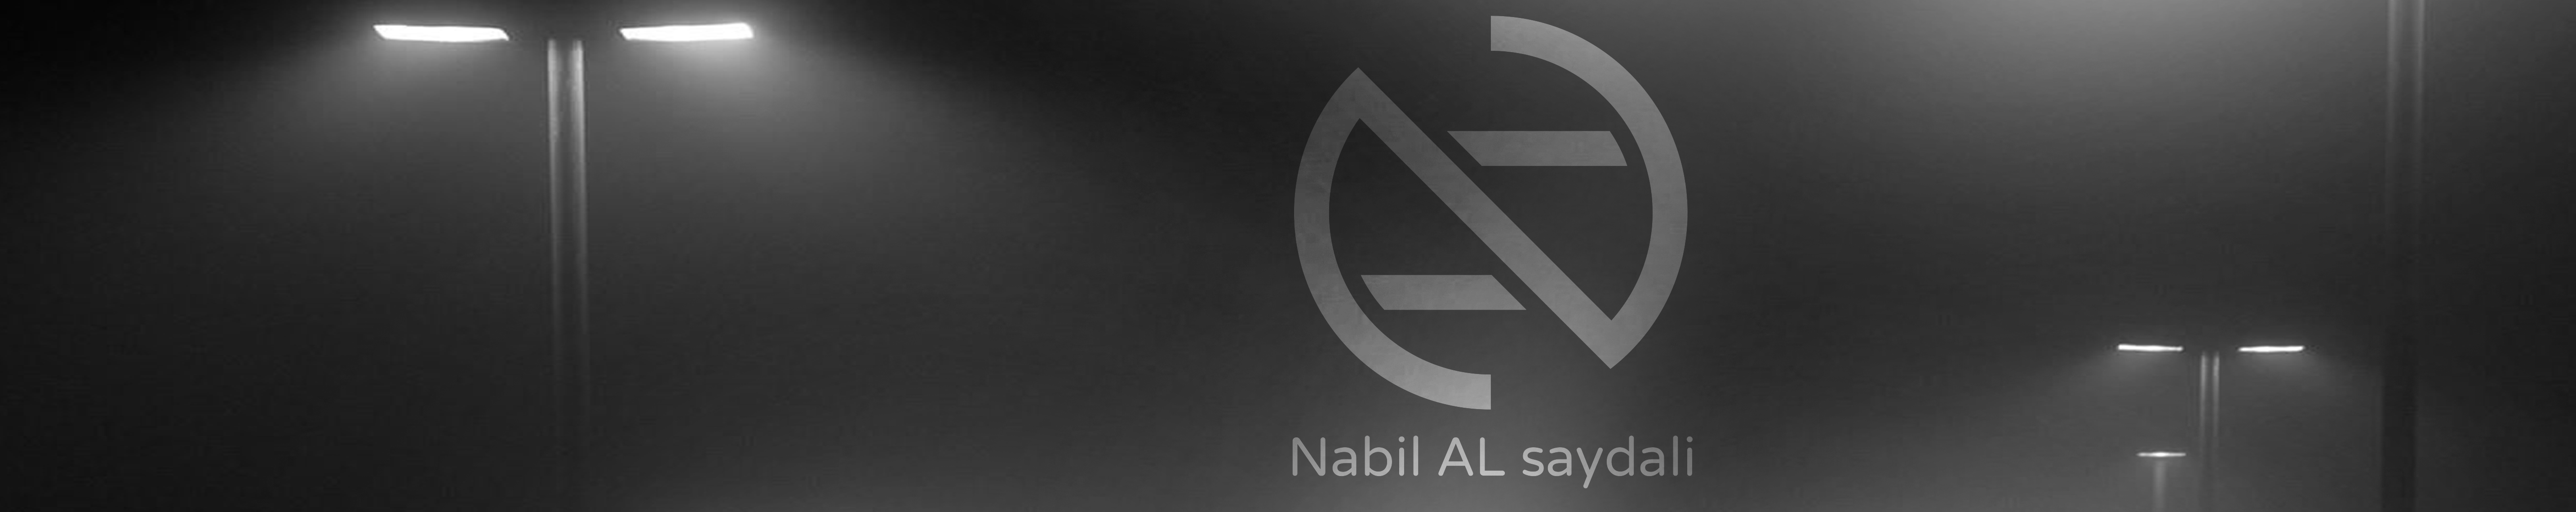 Profielbanner van Nabil Al Saydali